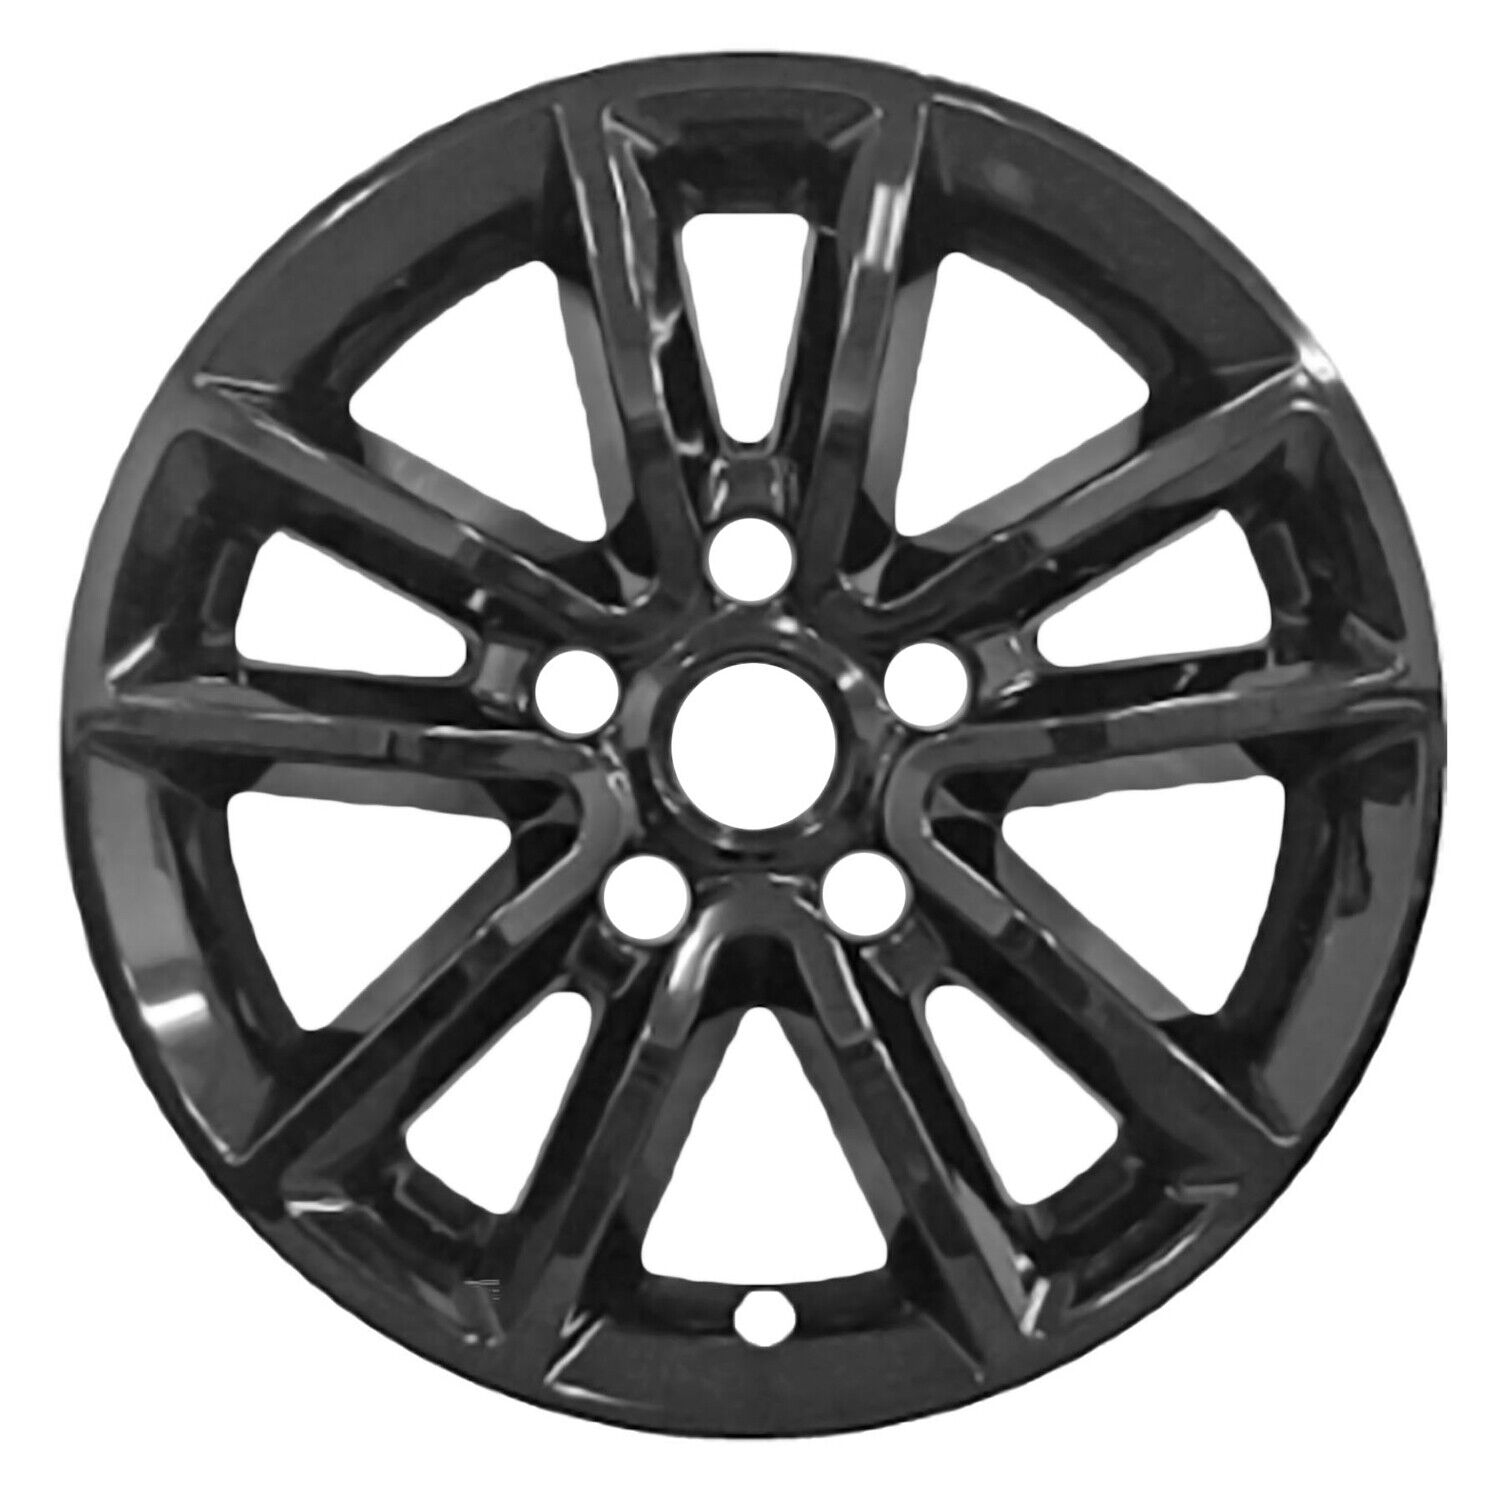 02399 Reconditioned OEM Aluminum Wheel 17x6.5 fits 2013-2020 Dodge Journey